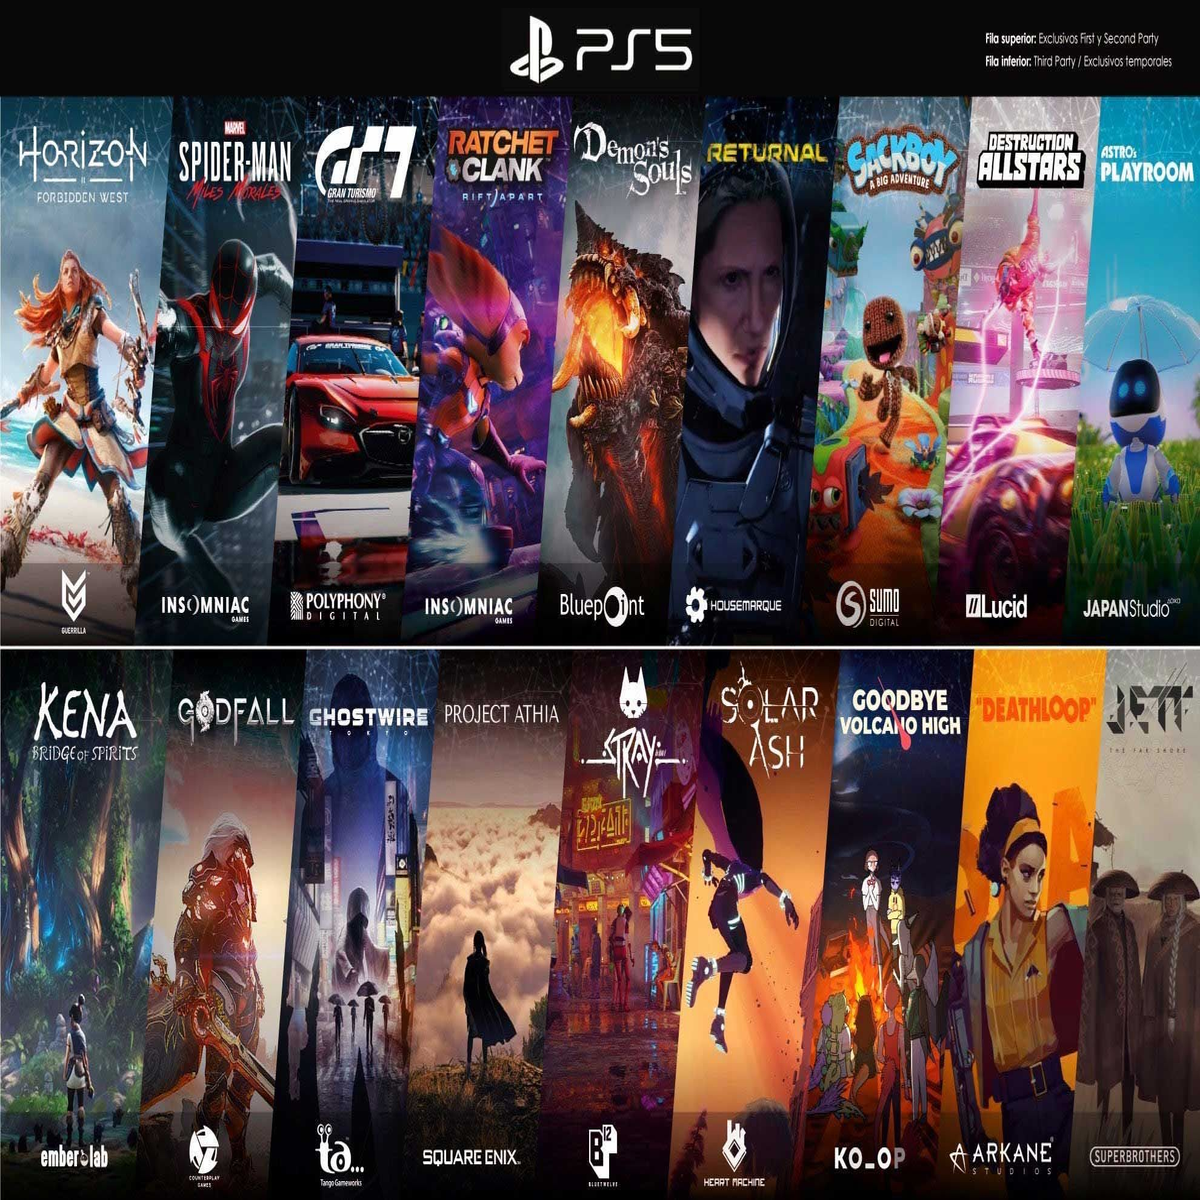 PlayStation: update de jogos exclusivos do PS4 para PS5 agora será pago